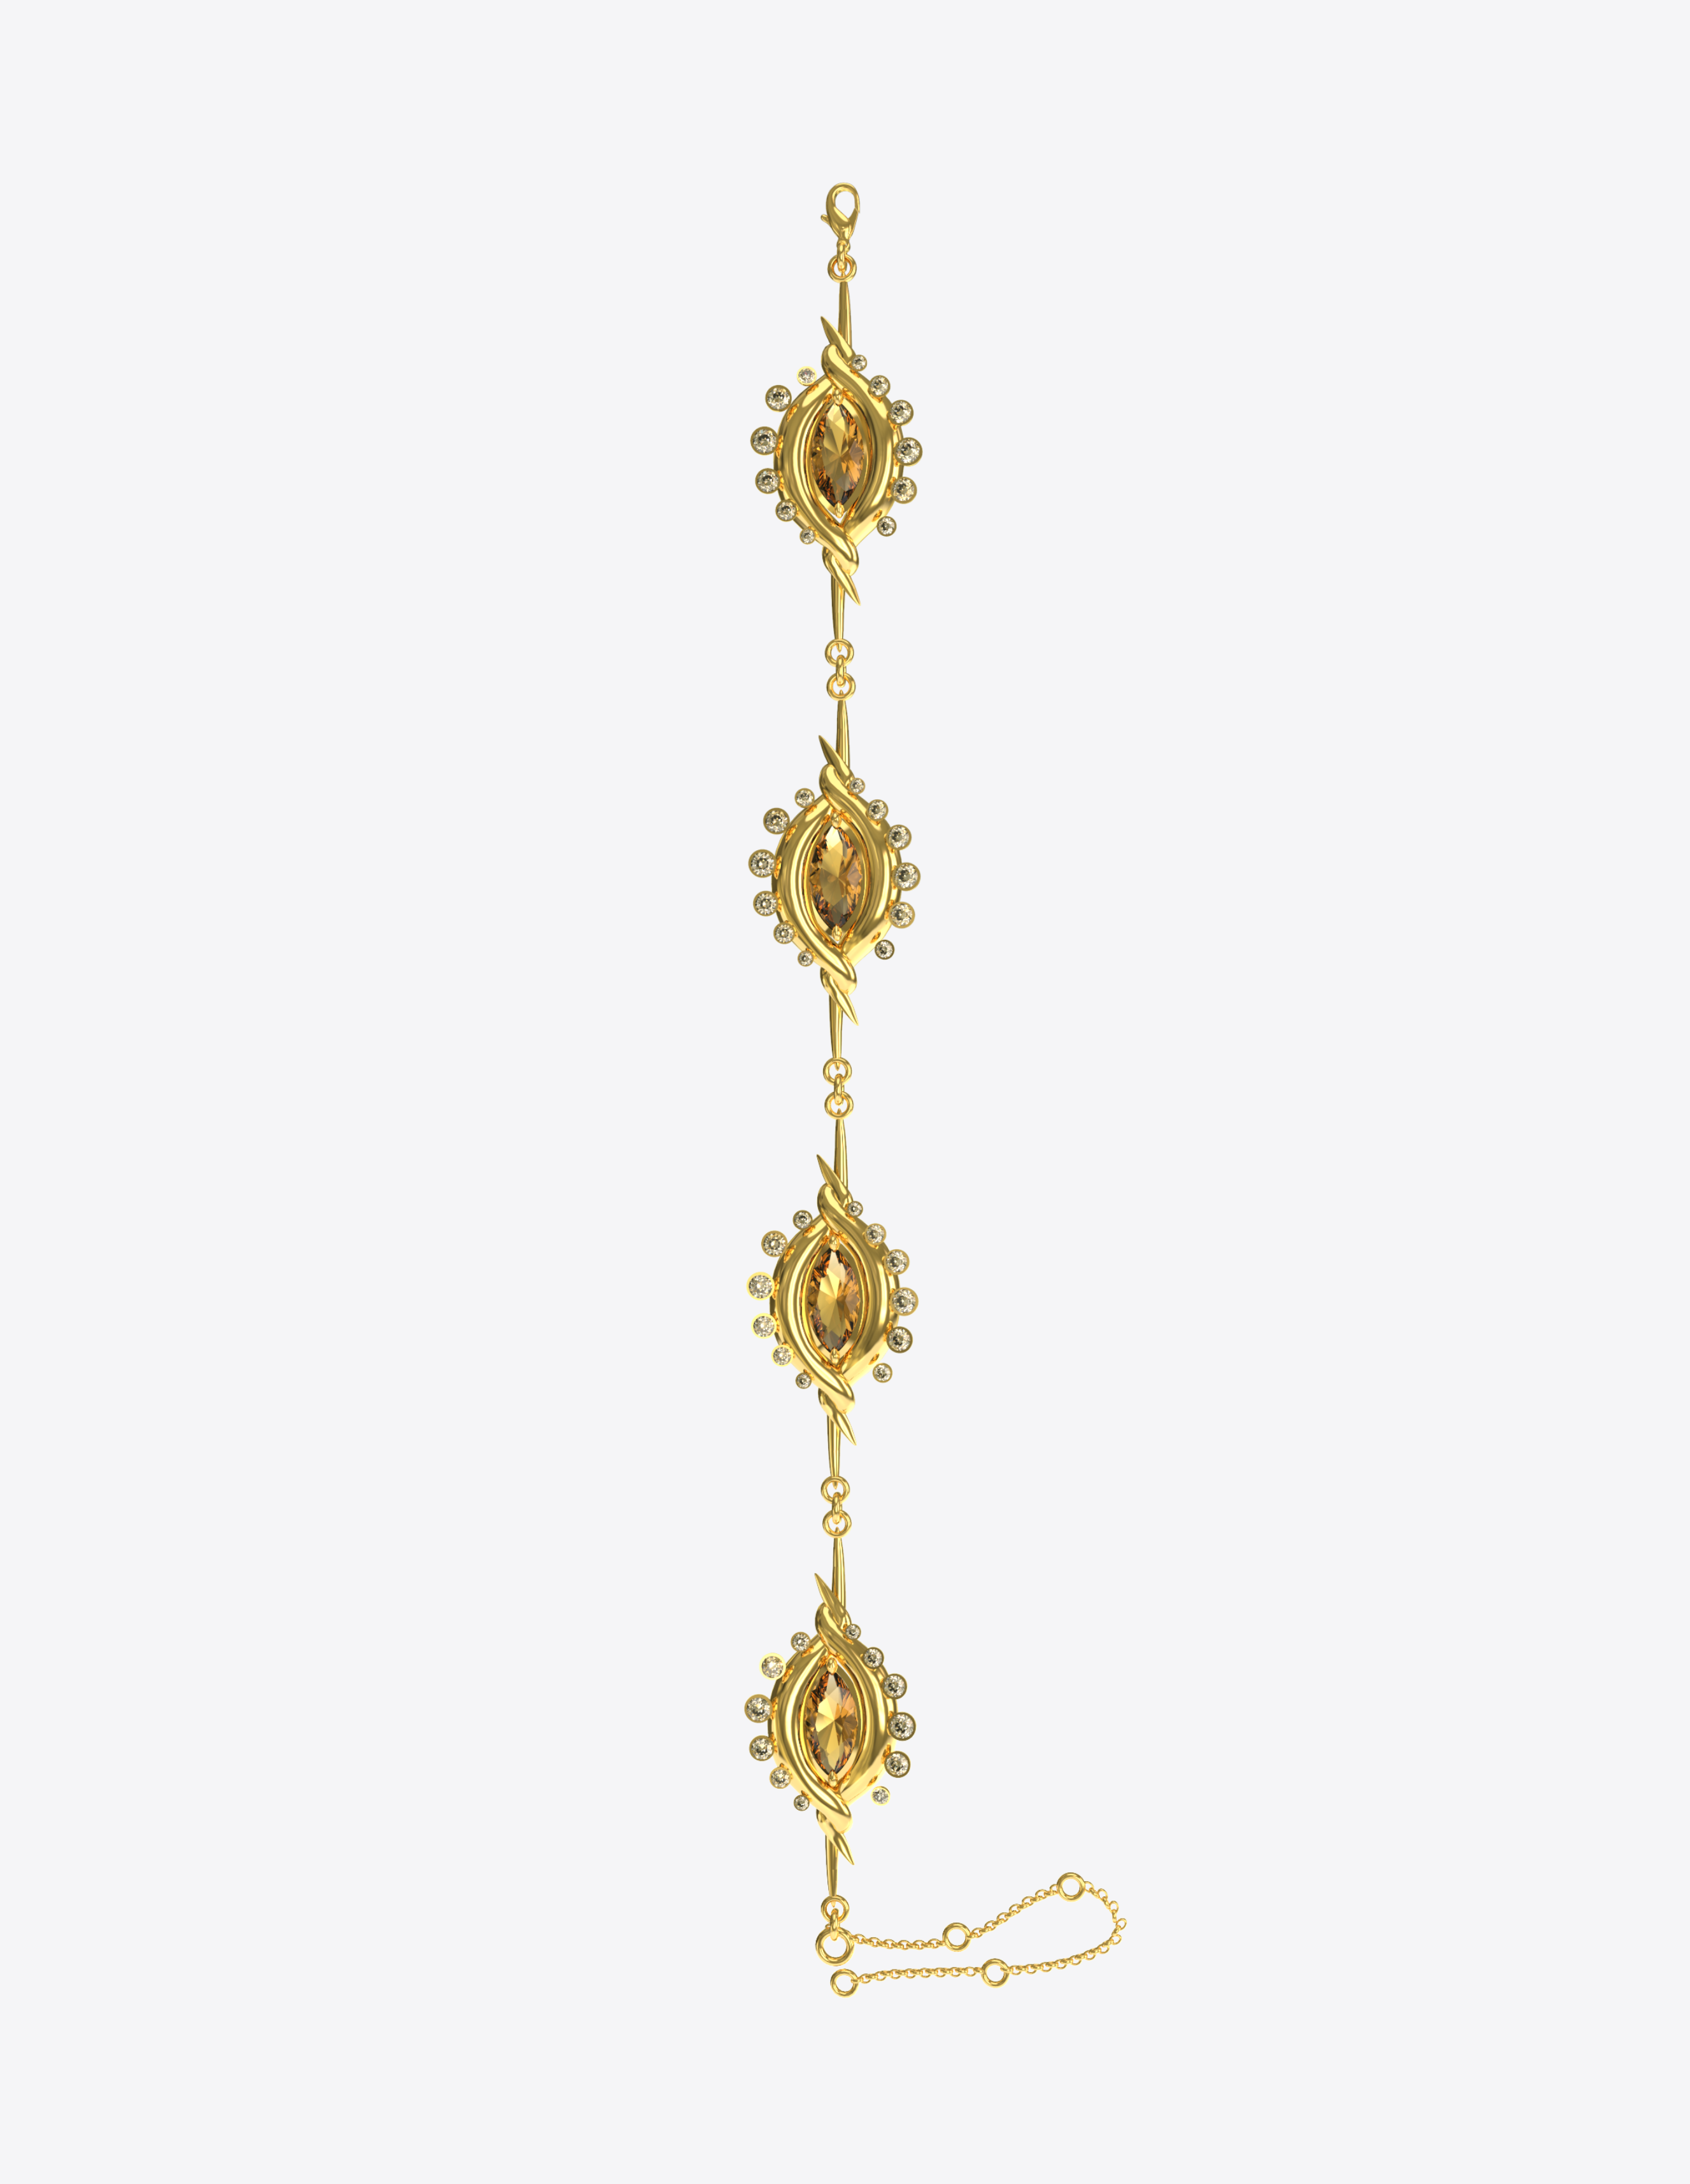 Umoja Link Bracelet in 18K Gold with Citrine and Diamond